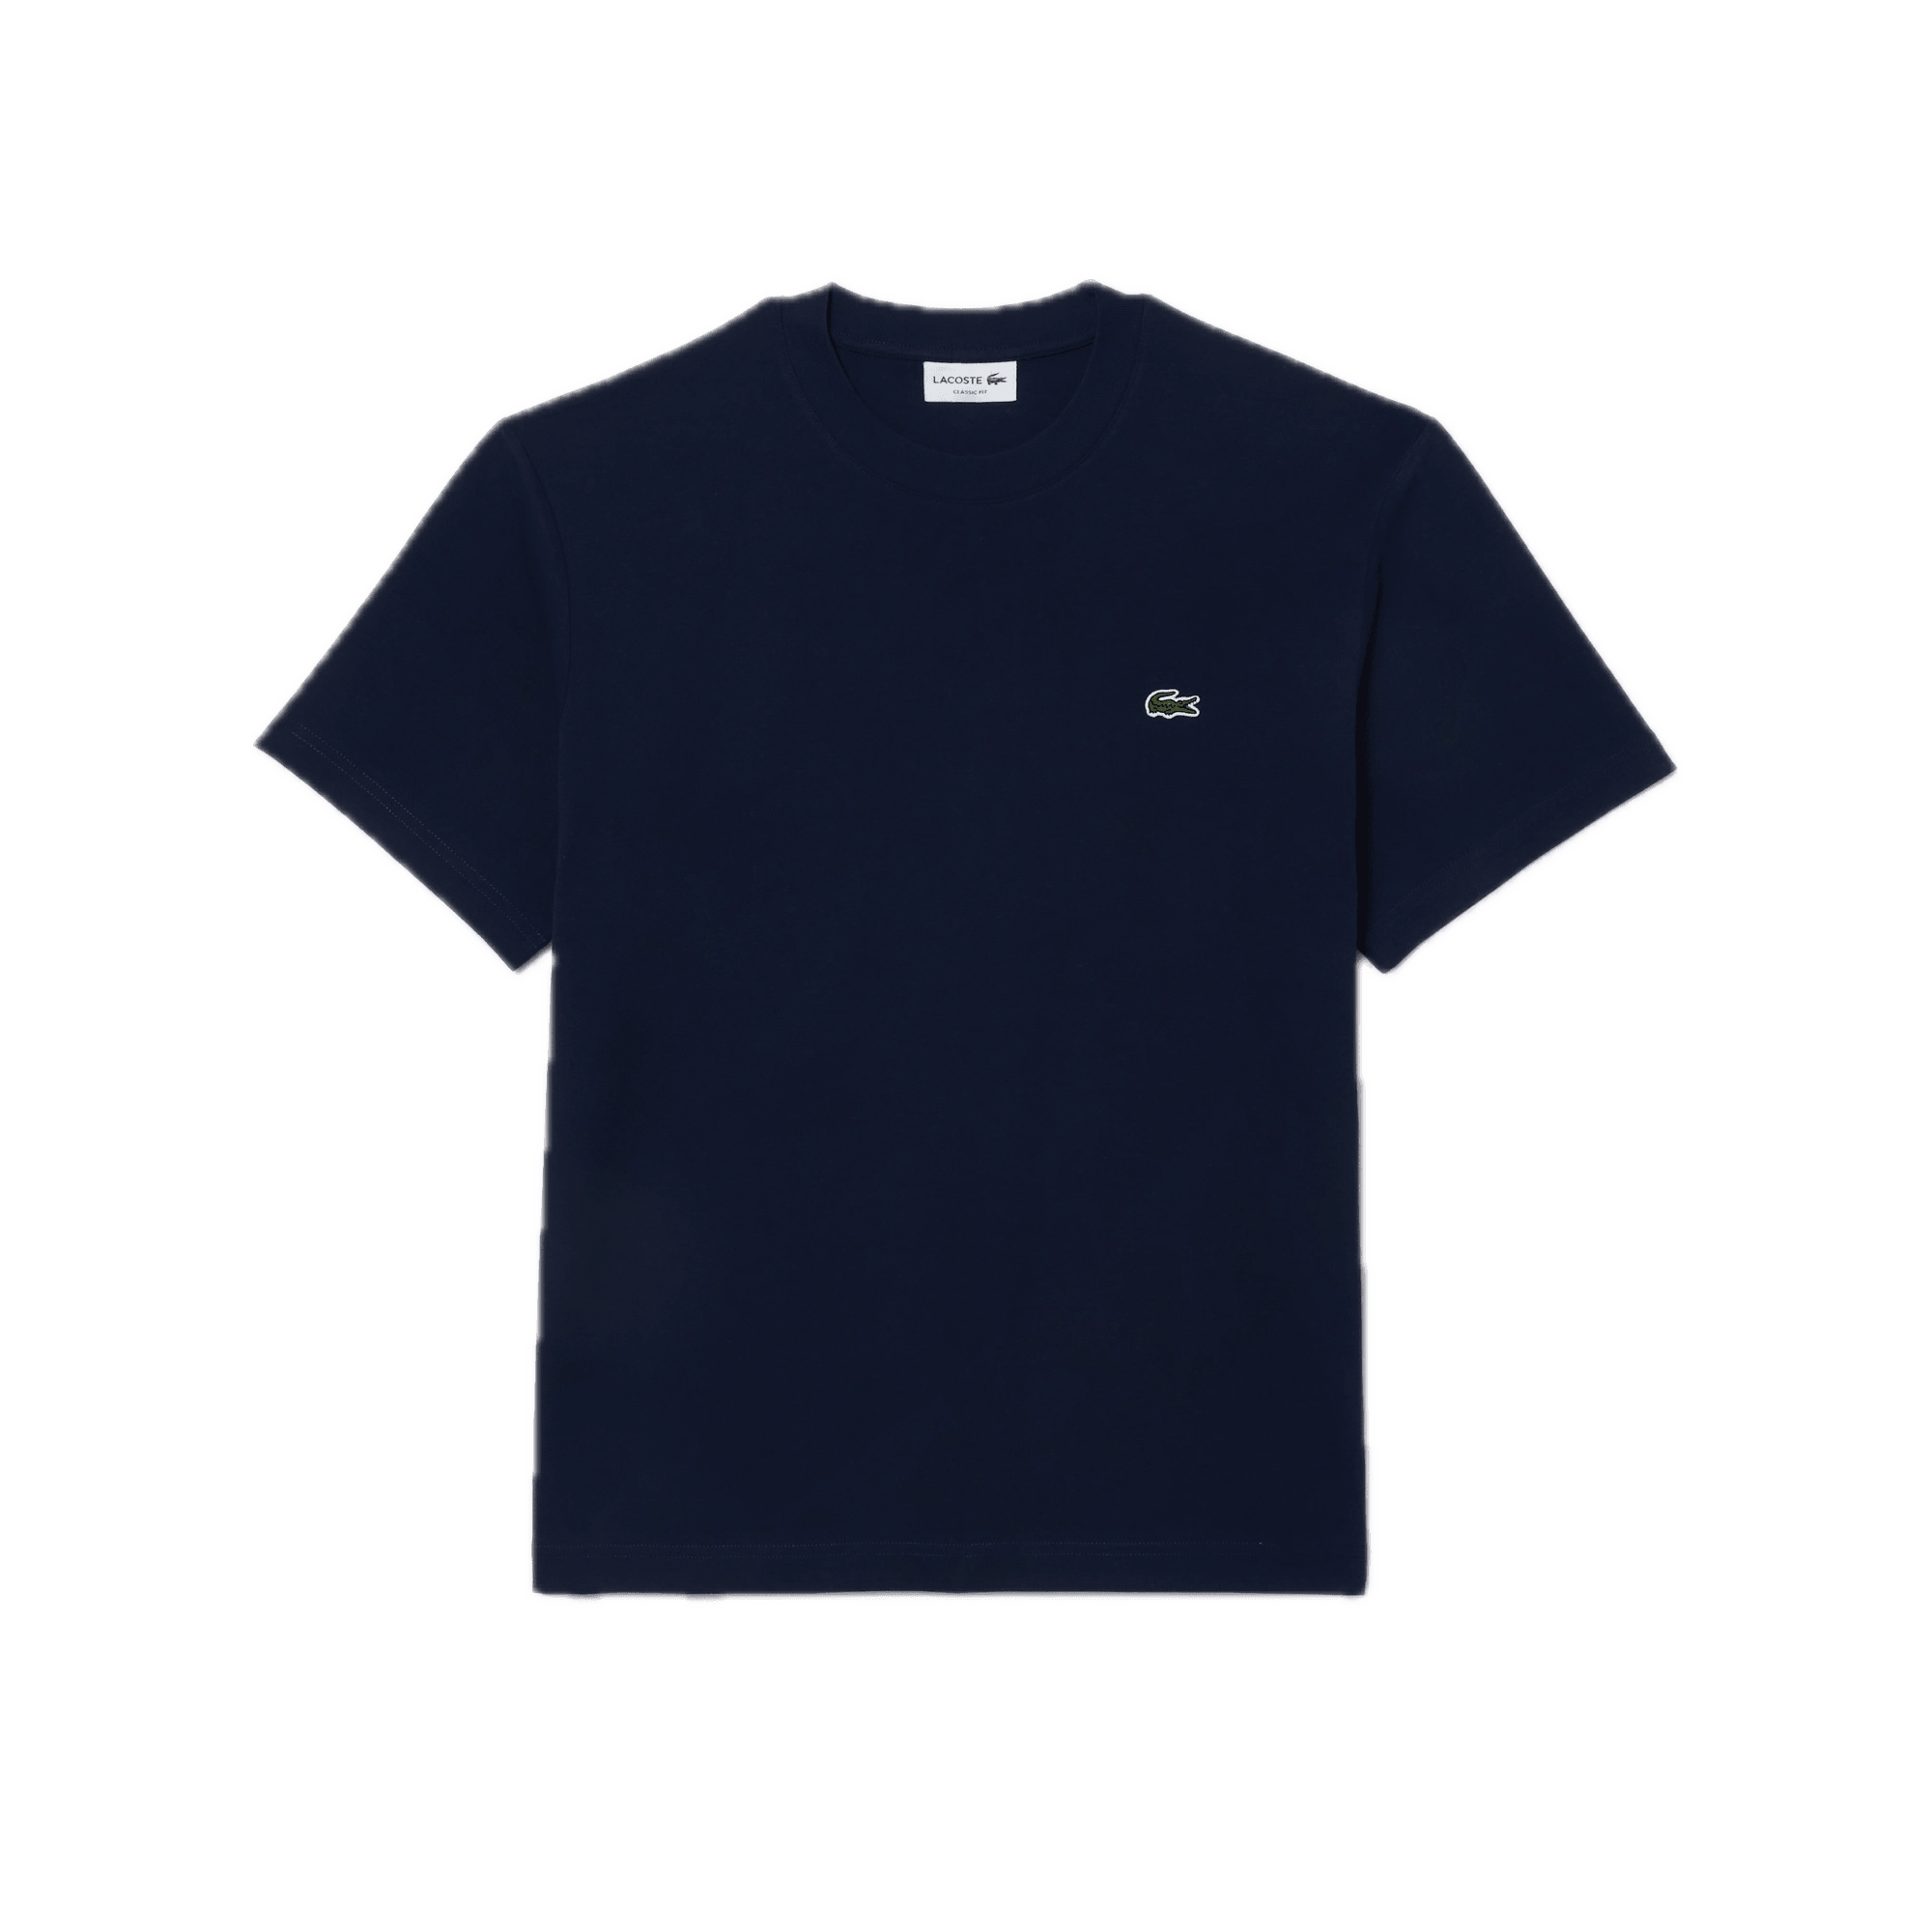 Camiseta Lacoste de Corte Clásico de Punto de Algodón Azul Marina - ECRU